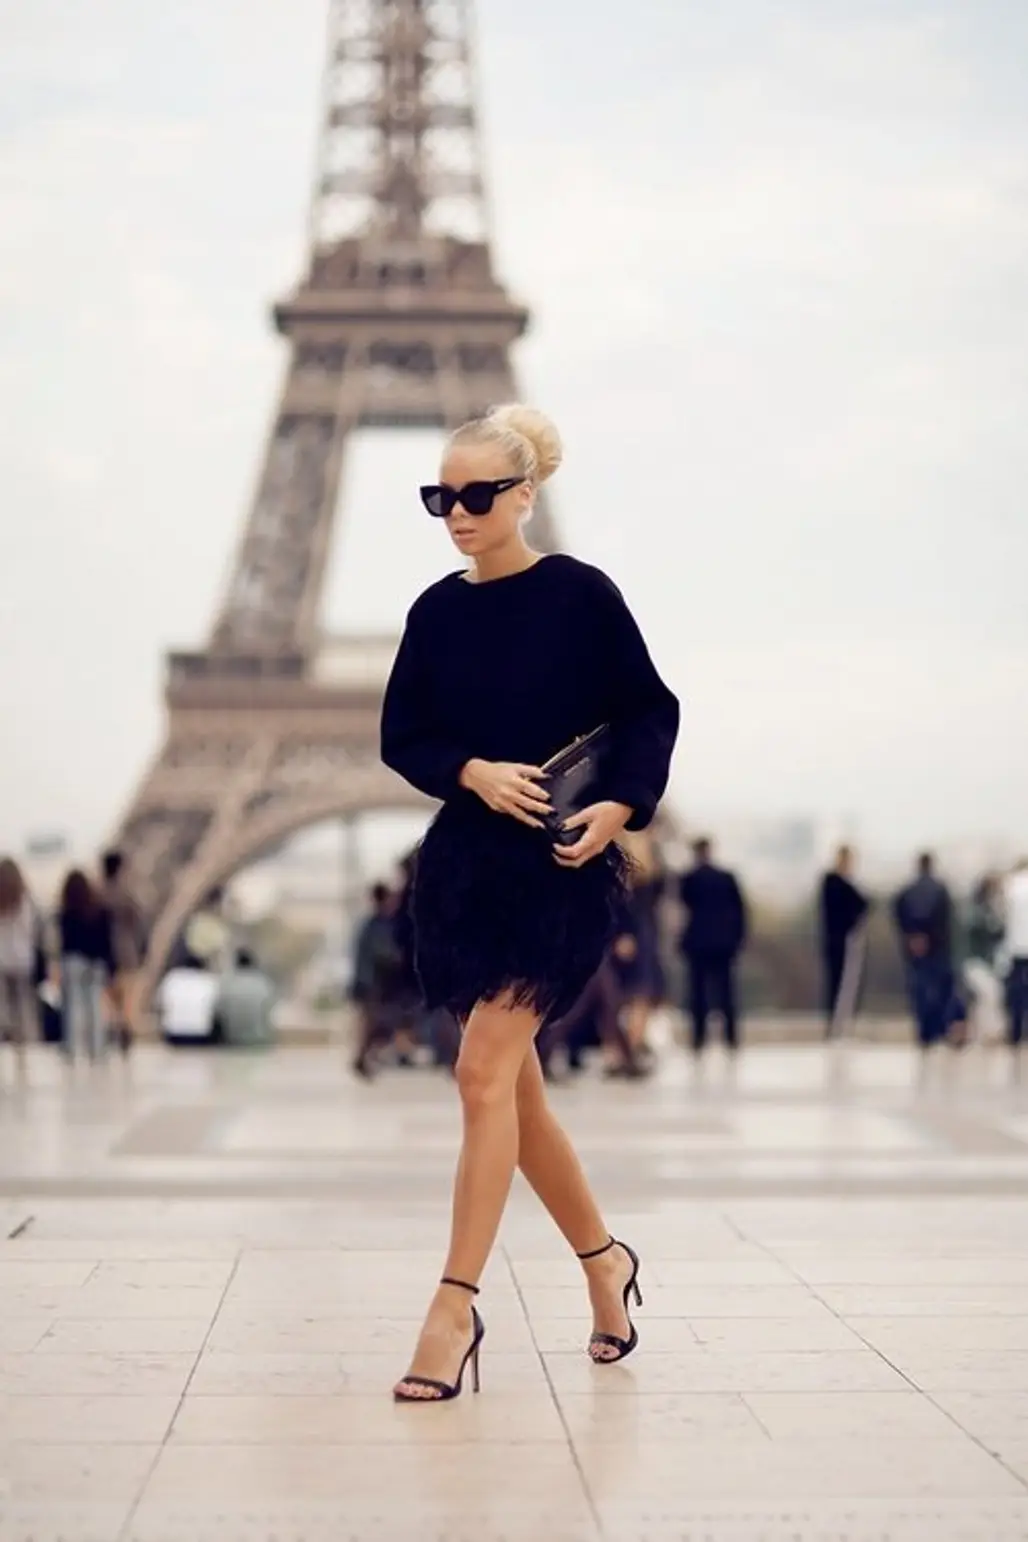 Eiffel Tower,photograph,clothing,beauty,fashion,